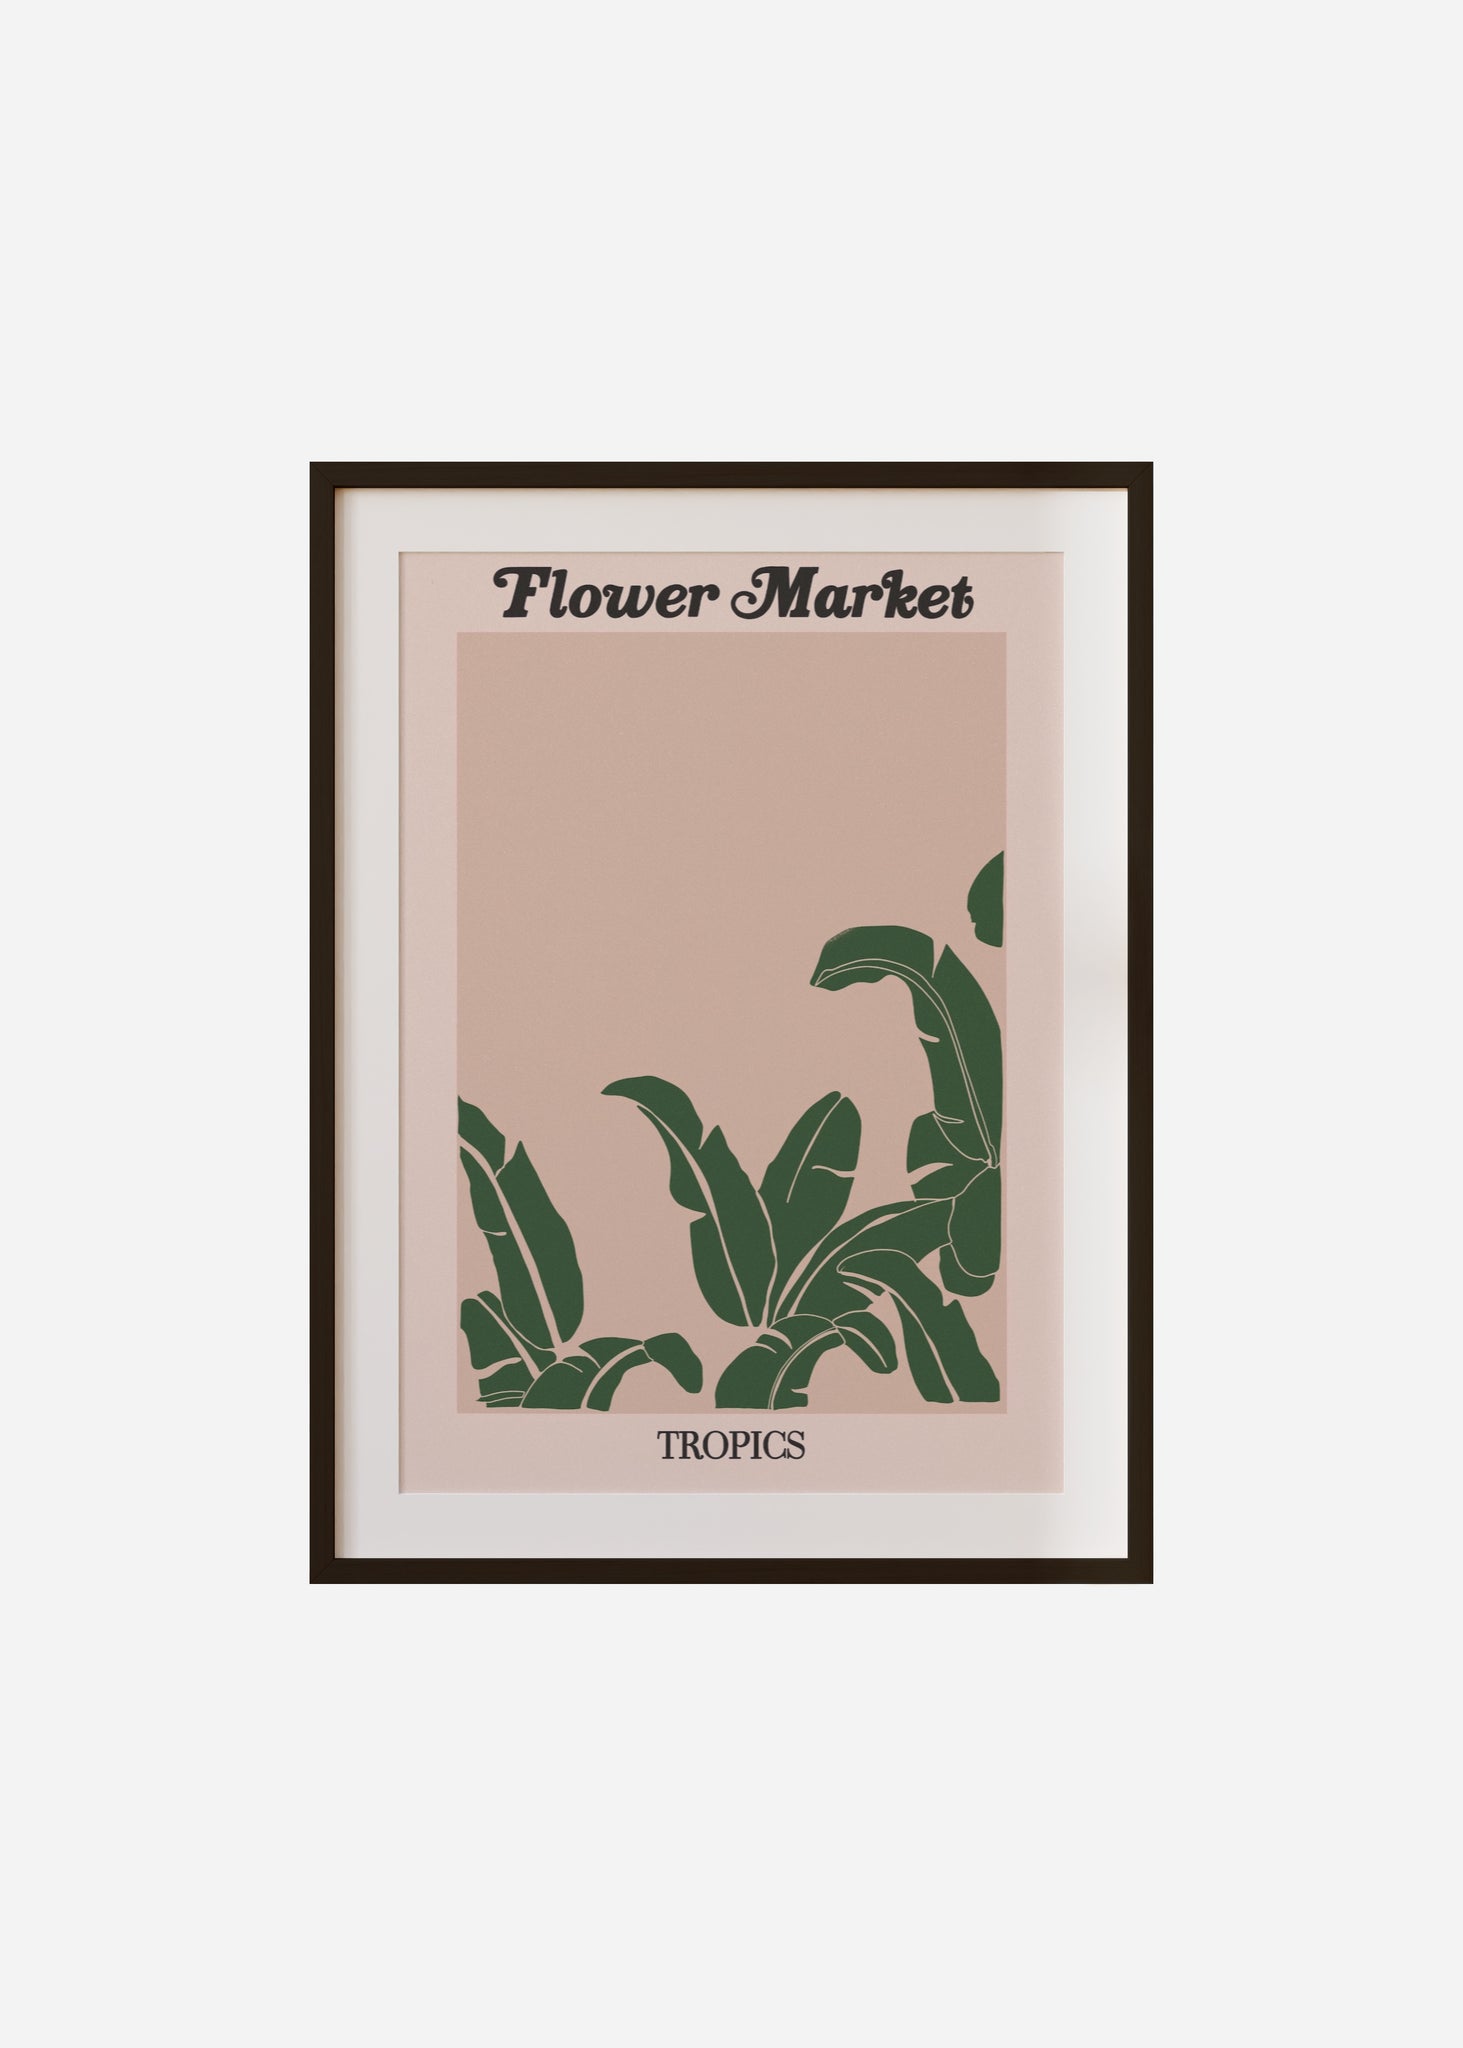 flower market / tropics Framed & Mounted Print